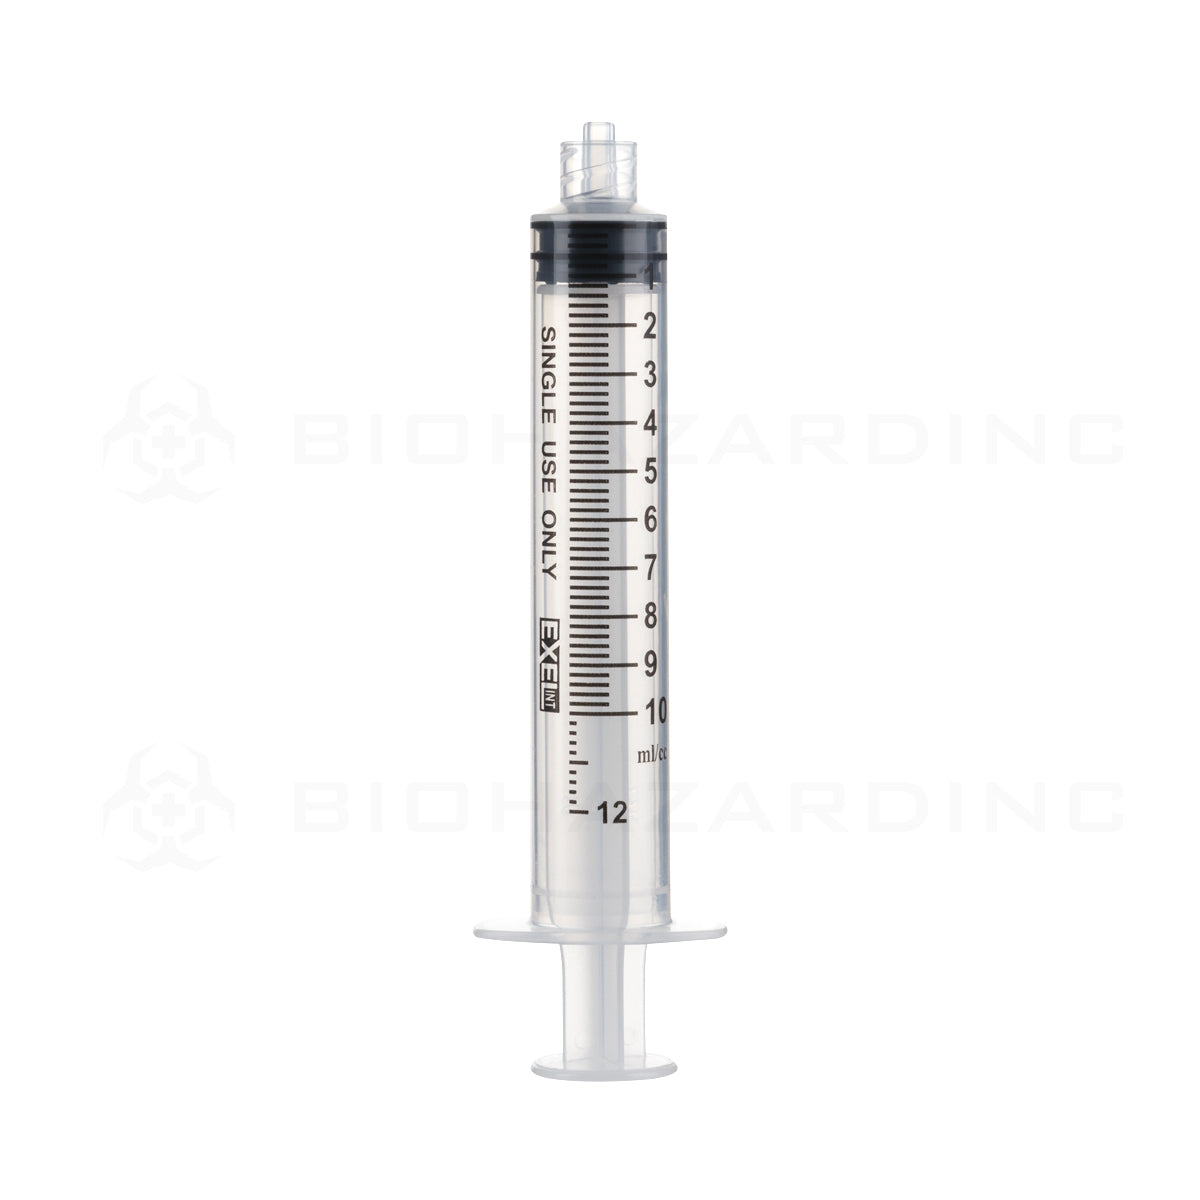 Luer Lock | Concentrate Plastic Syringe | 10ml - 1ml Increments - 100 Count Syringe Biohazard Inc   